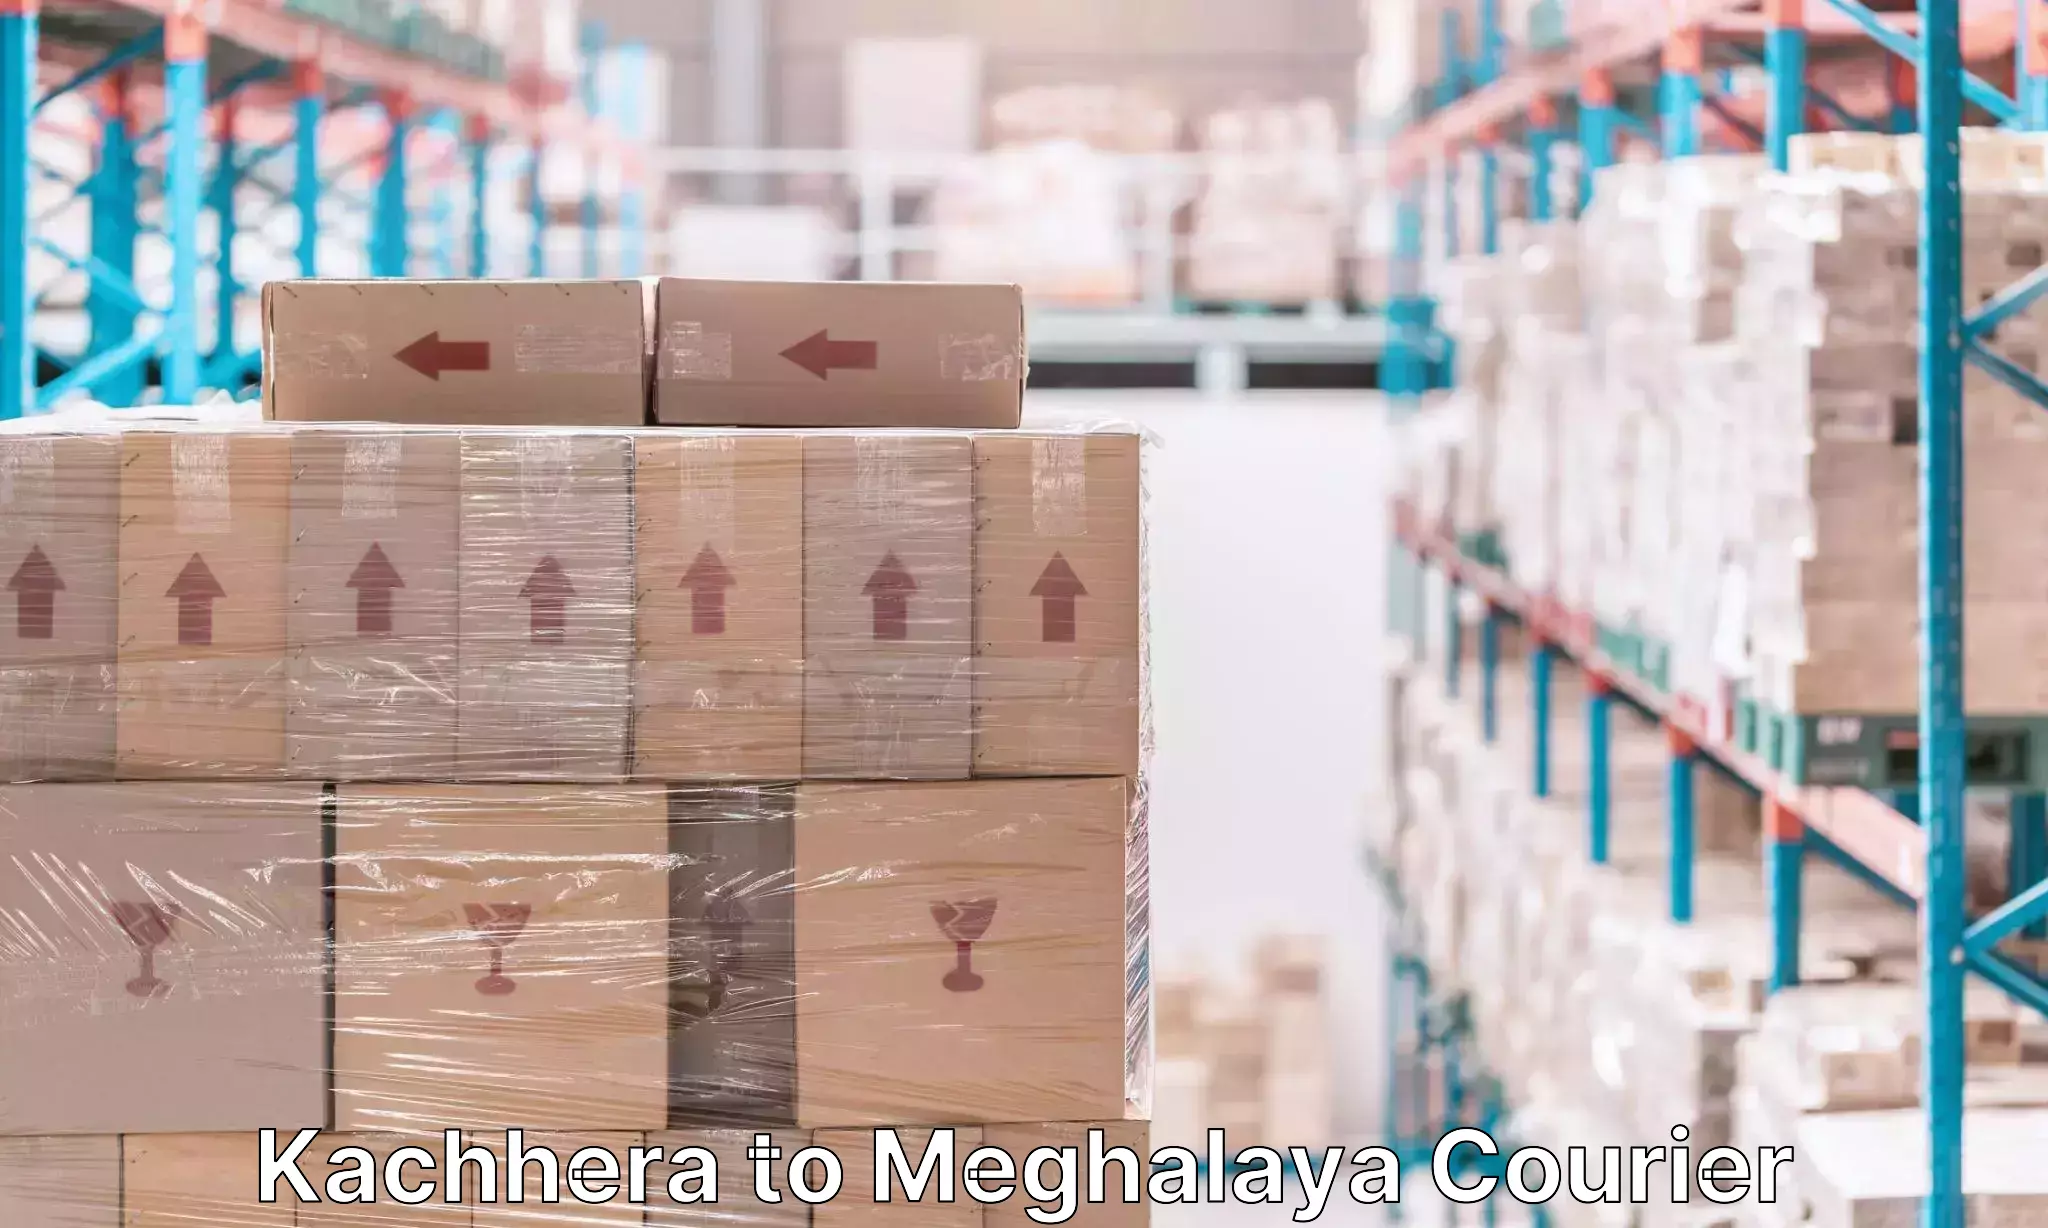 Baggage relocation service Kachhera to Meghalaya